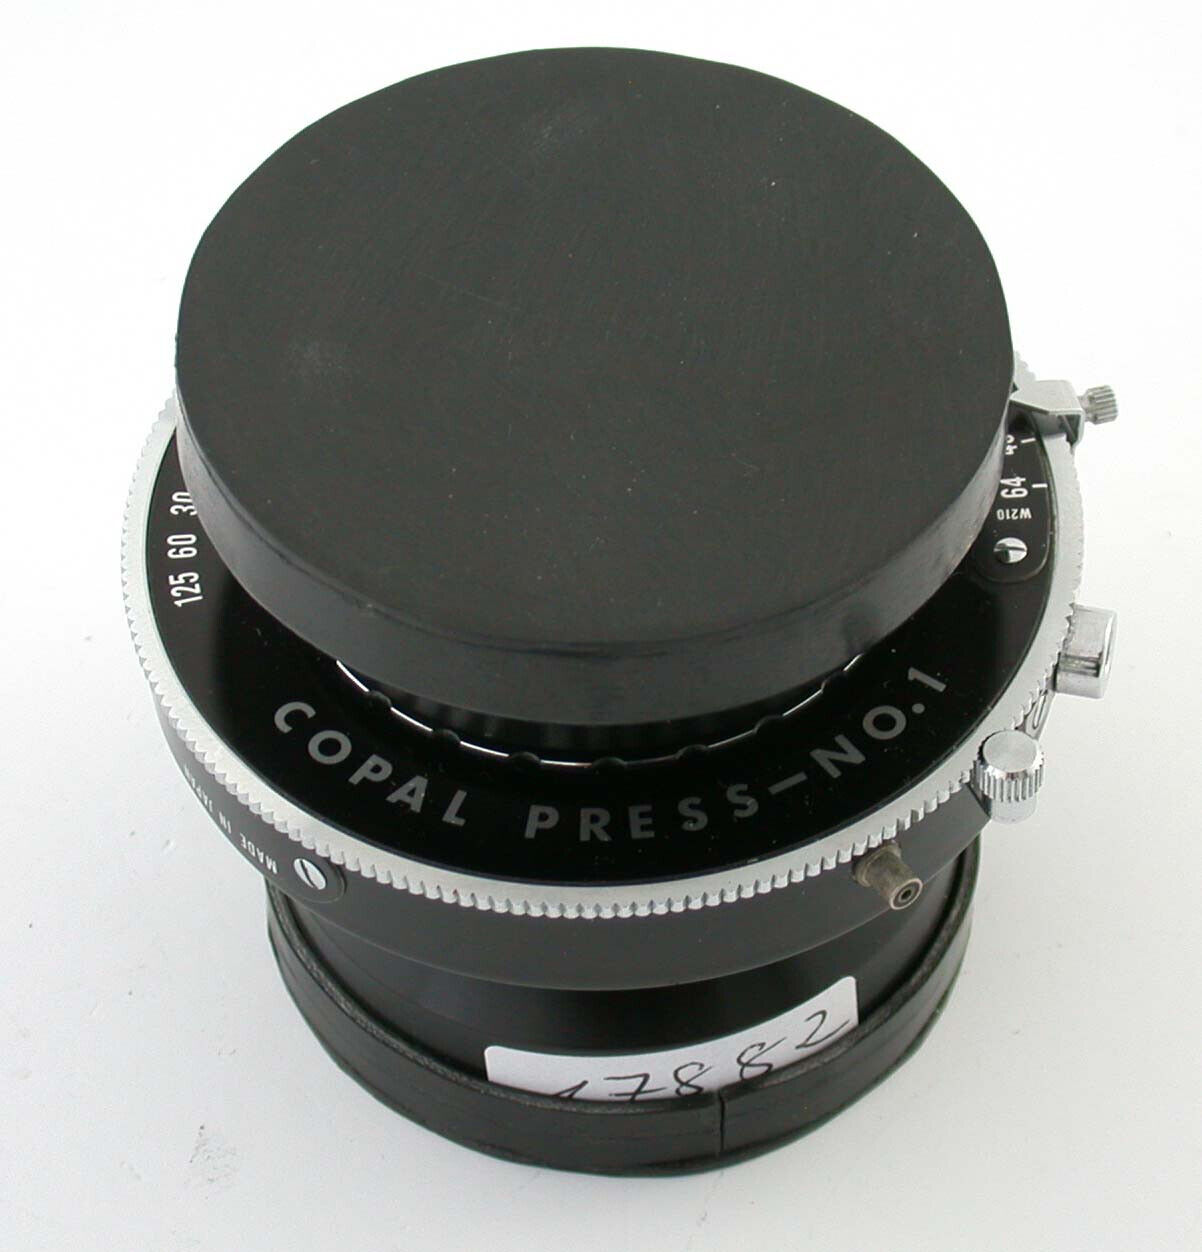 Schneider Apo Symmar 180mm F5.6 - フィルムカメラ